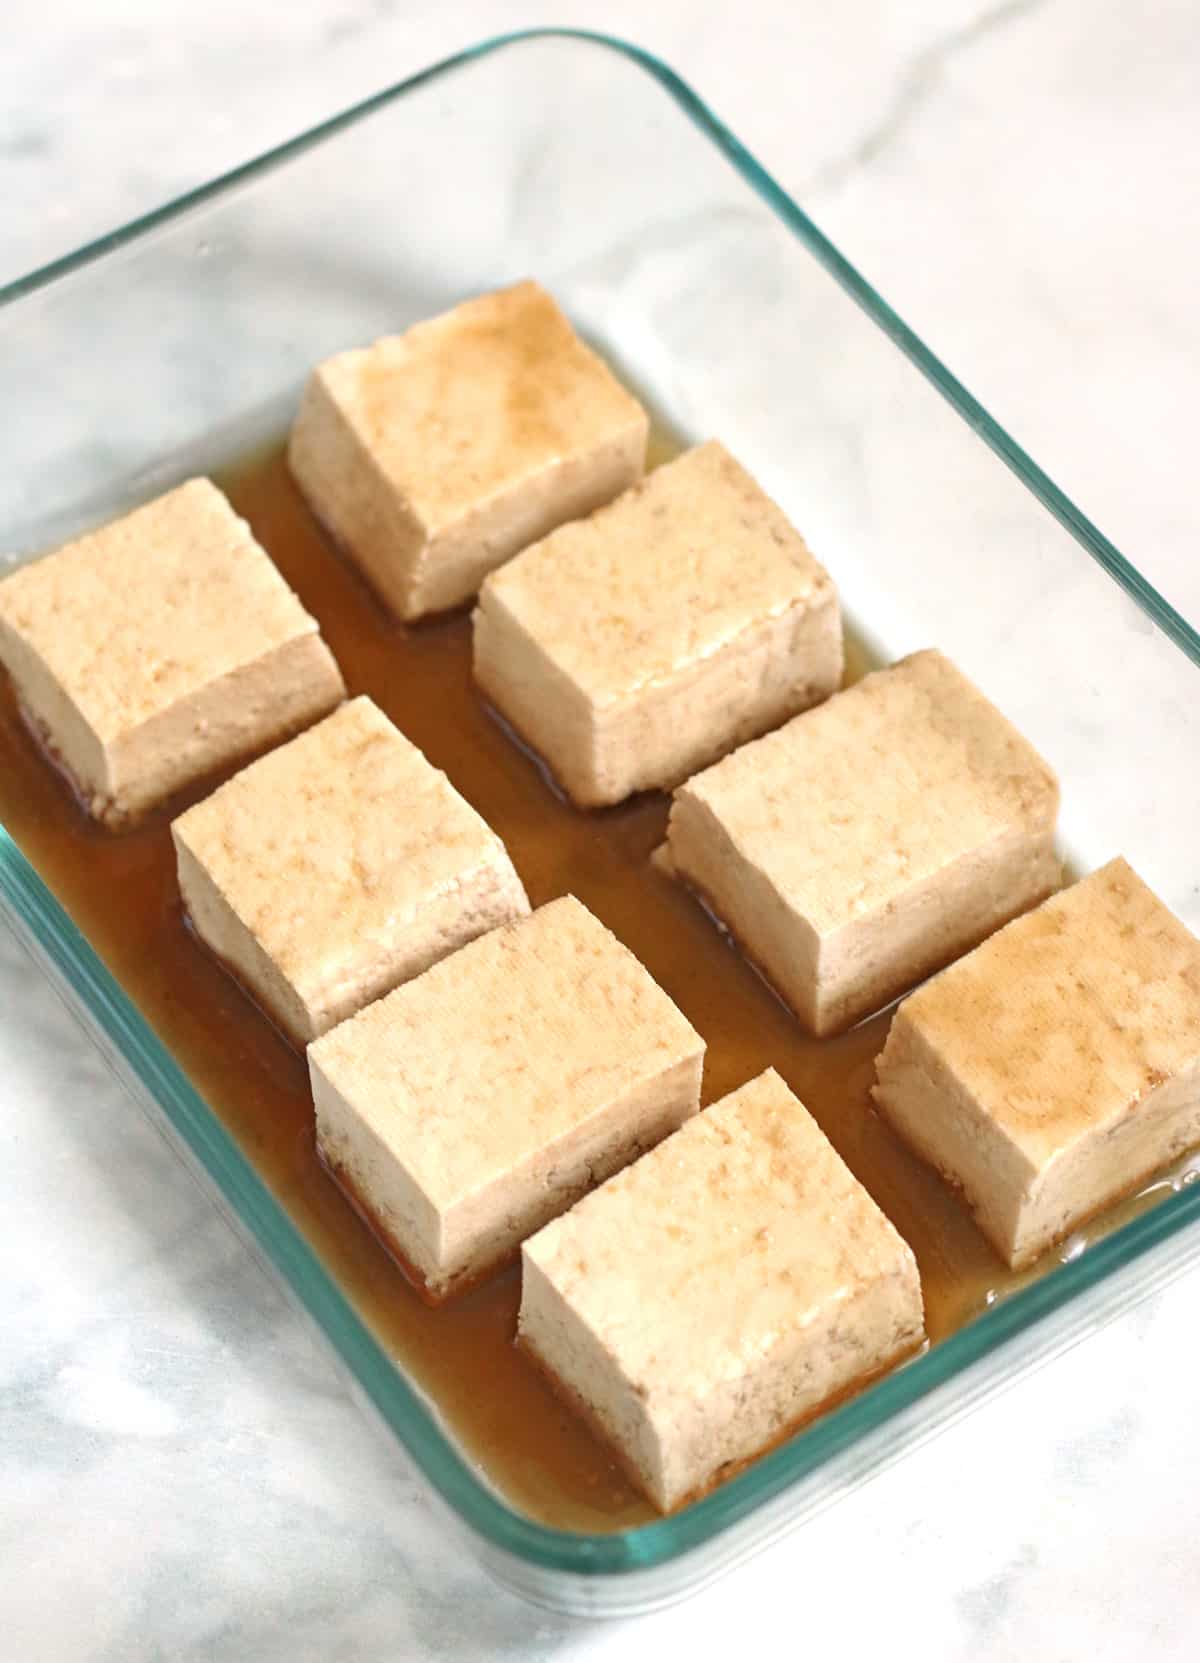 marinating tofu in a glass dish.